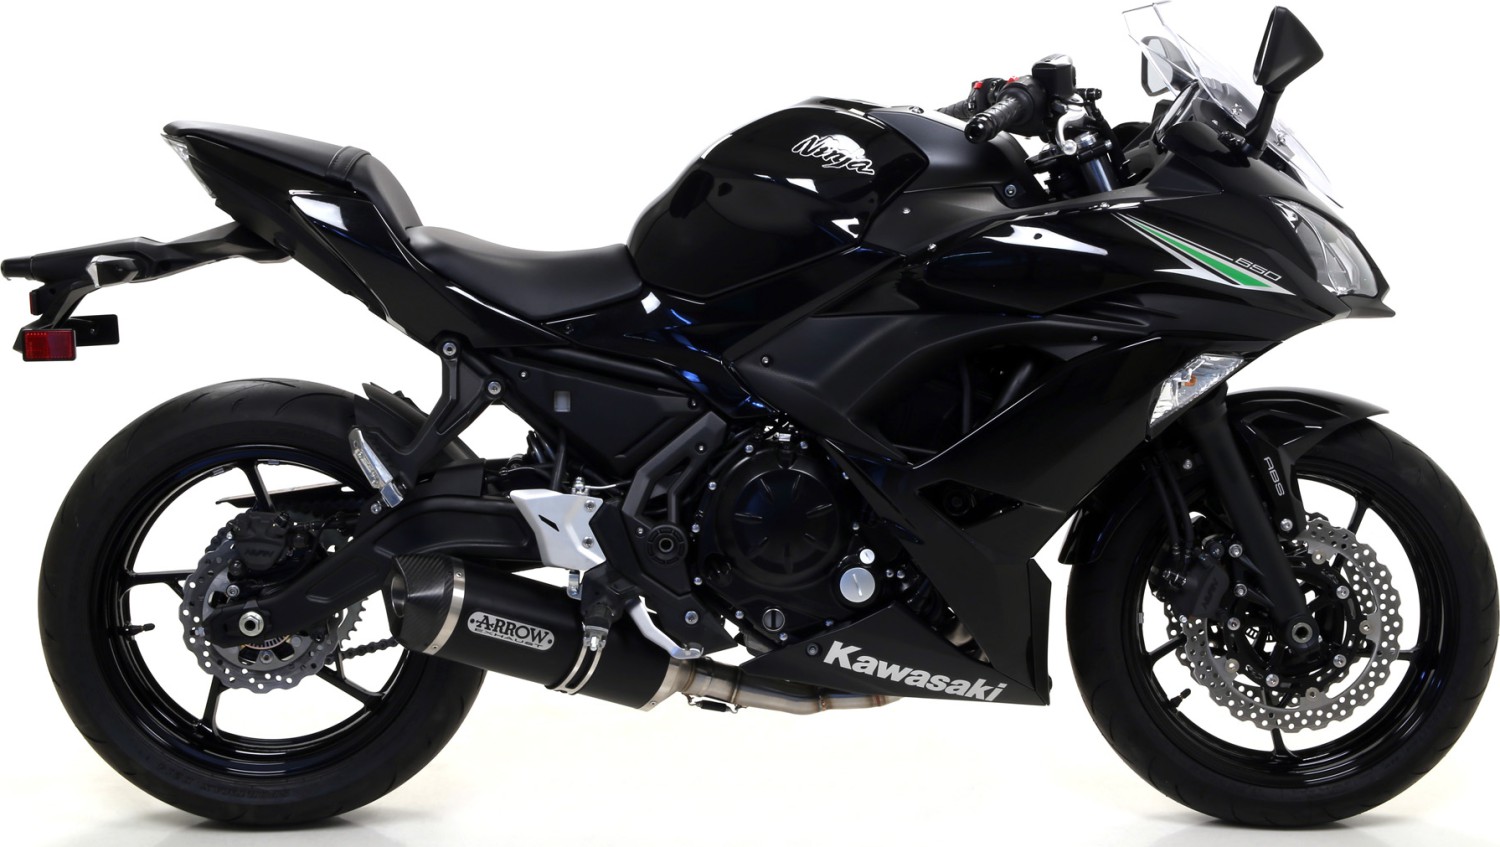  Kawasaki Ninja 650, Bj. 2017-2020 